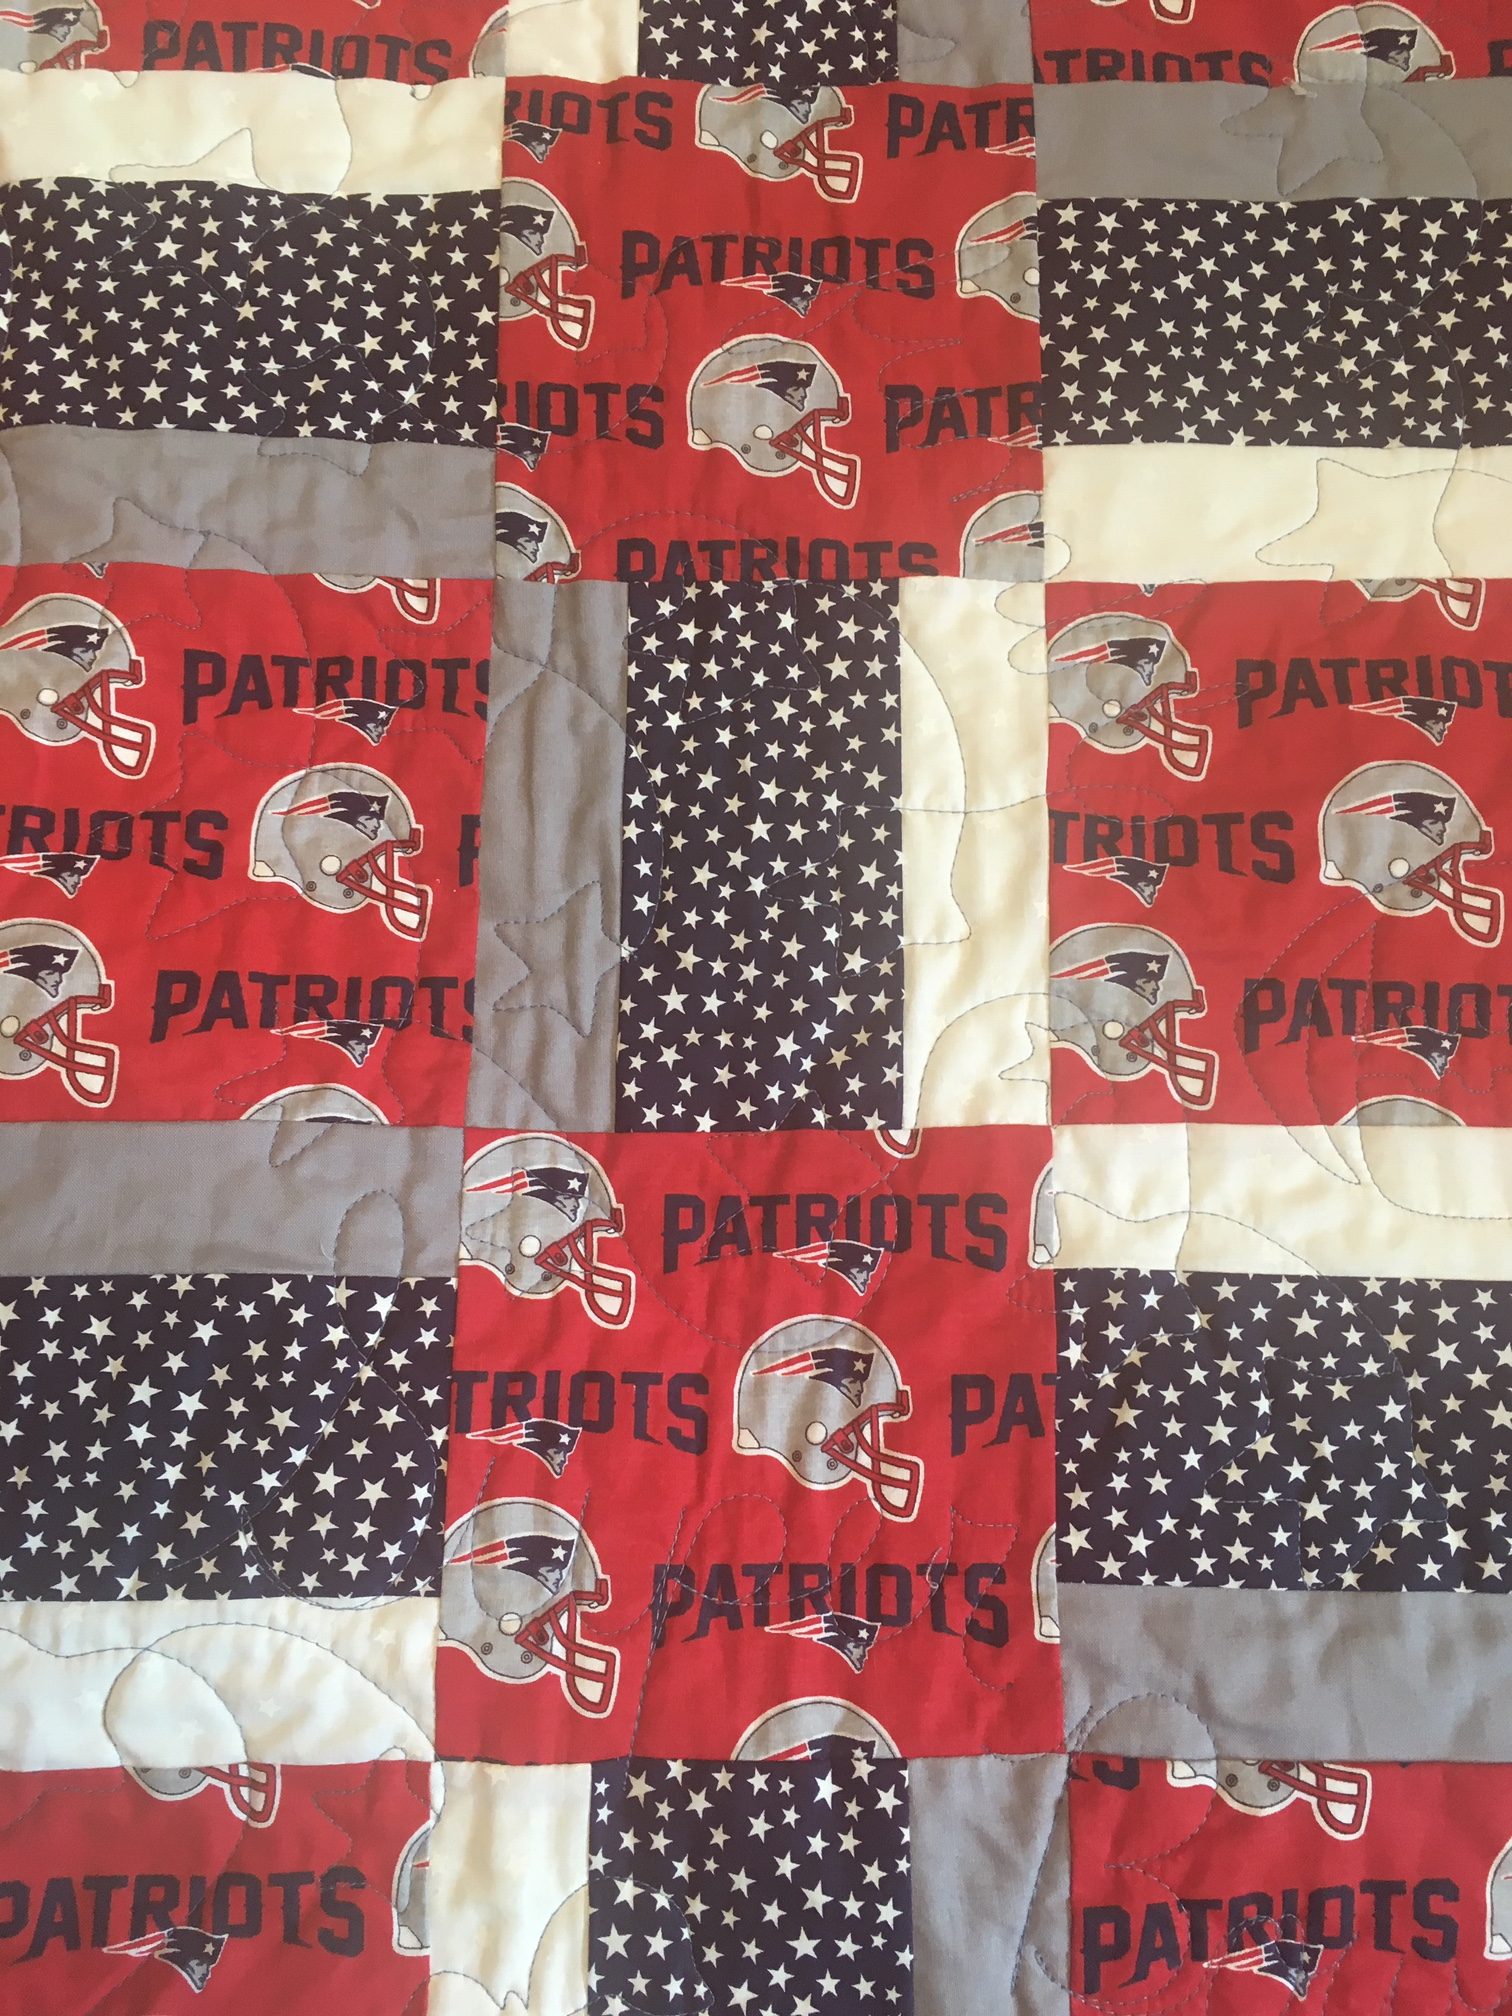 You gotta love the Patriots